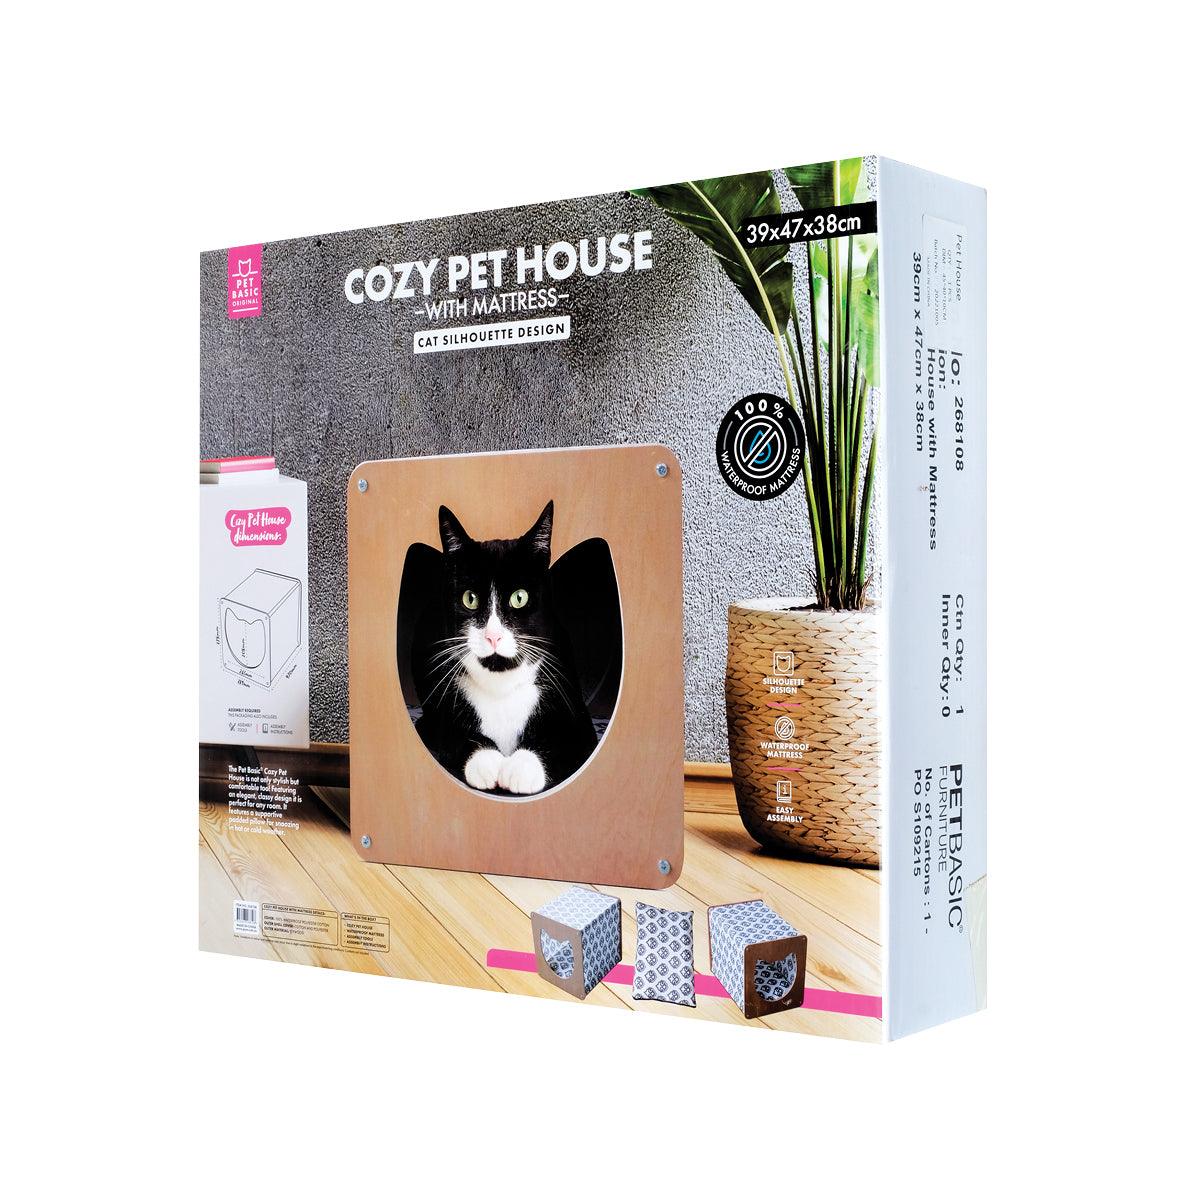 Pet Basic Cat Silhouette Cozy House Waterproof Mattress 39 x 47 x 38cm